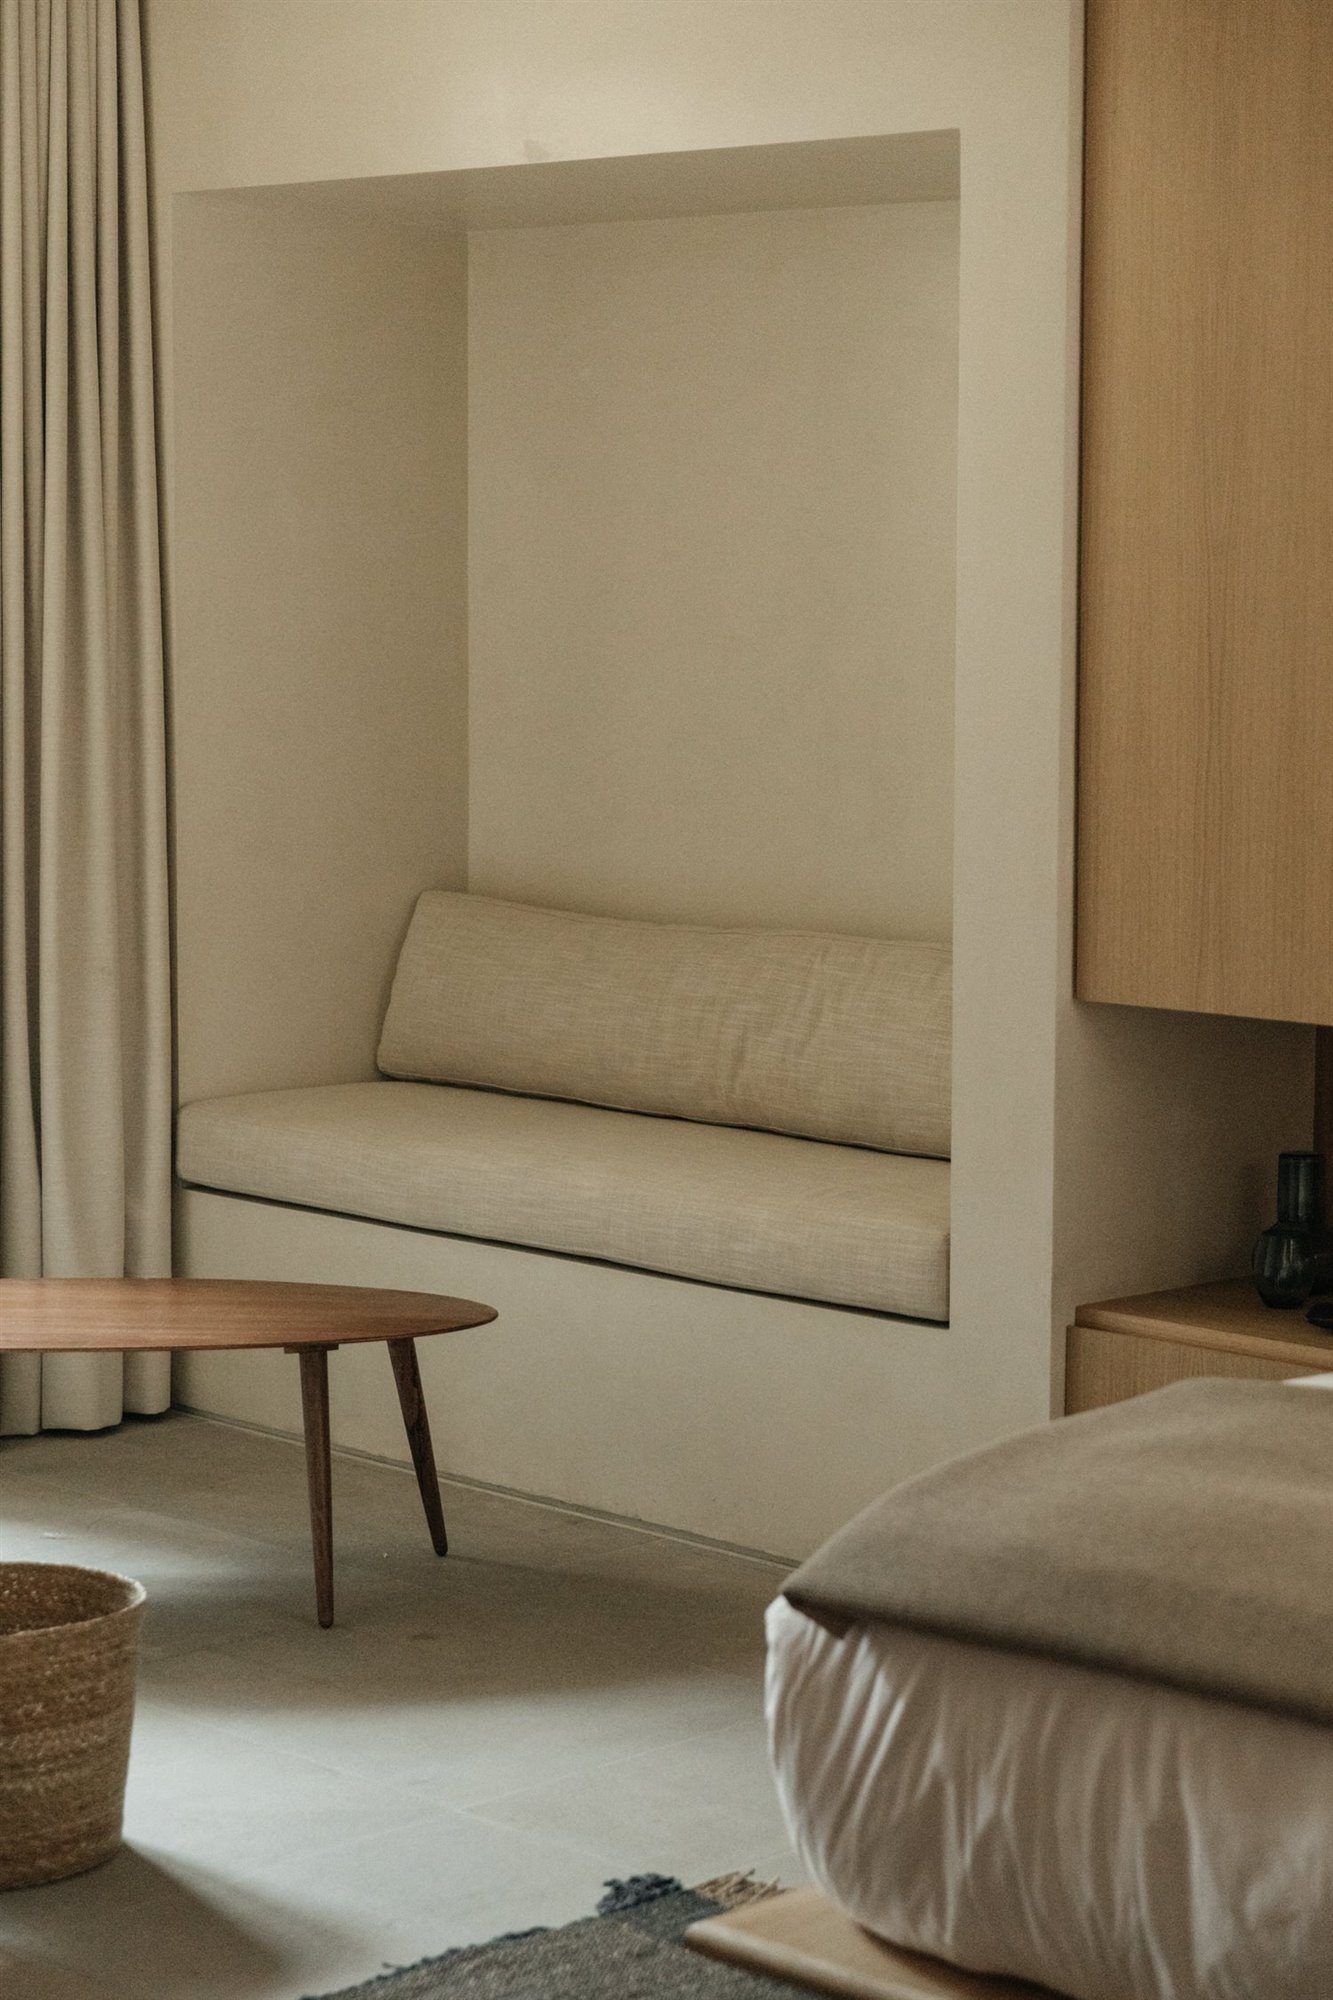 Casa Octavia hotel boutique en MExico condesa sofa hecho a medida